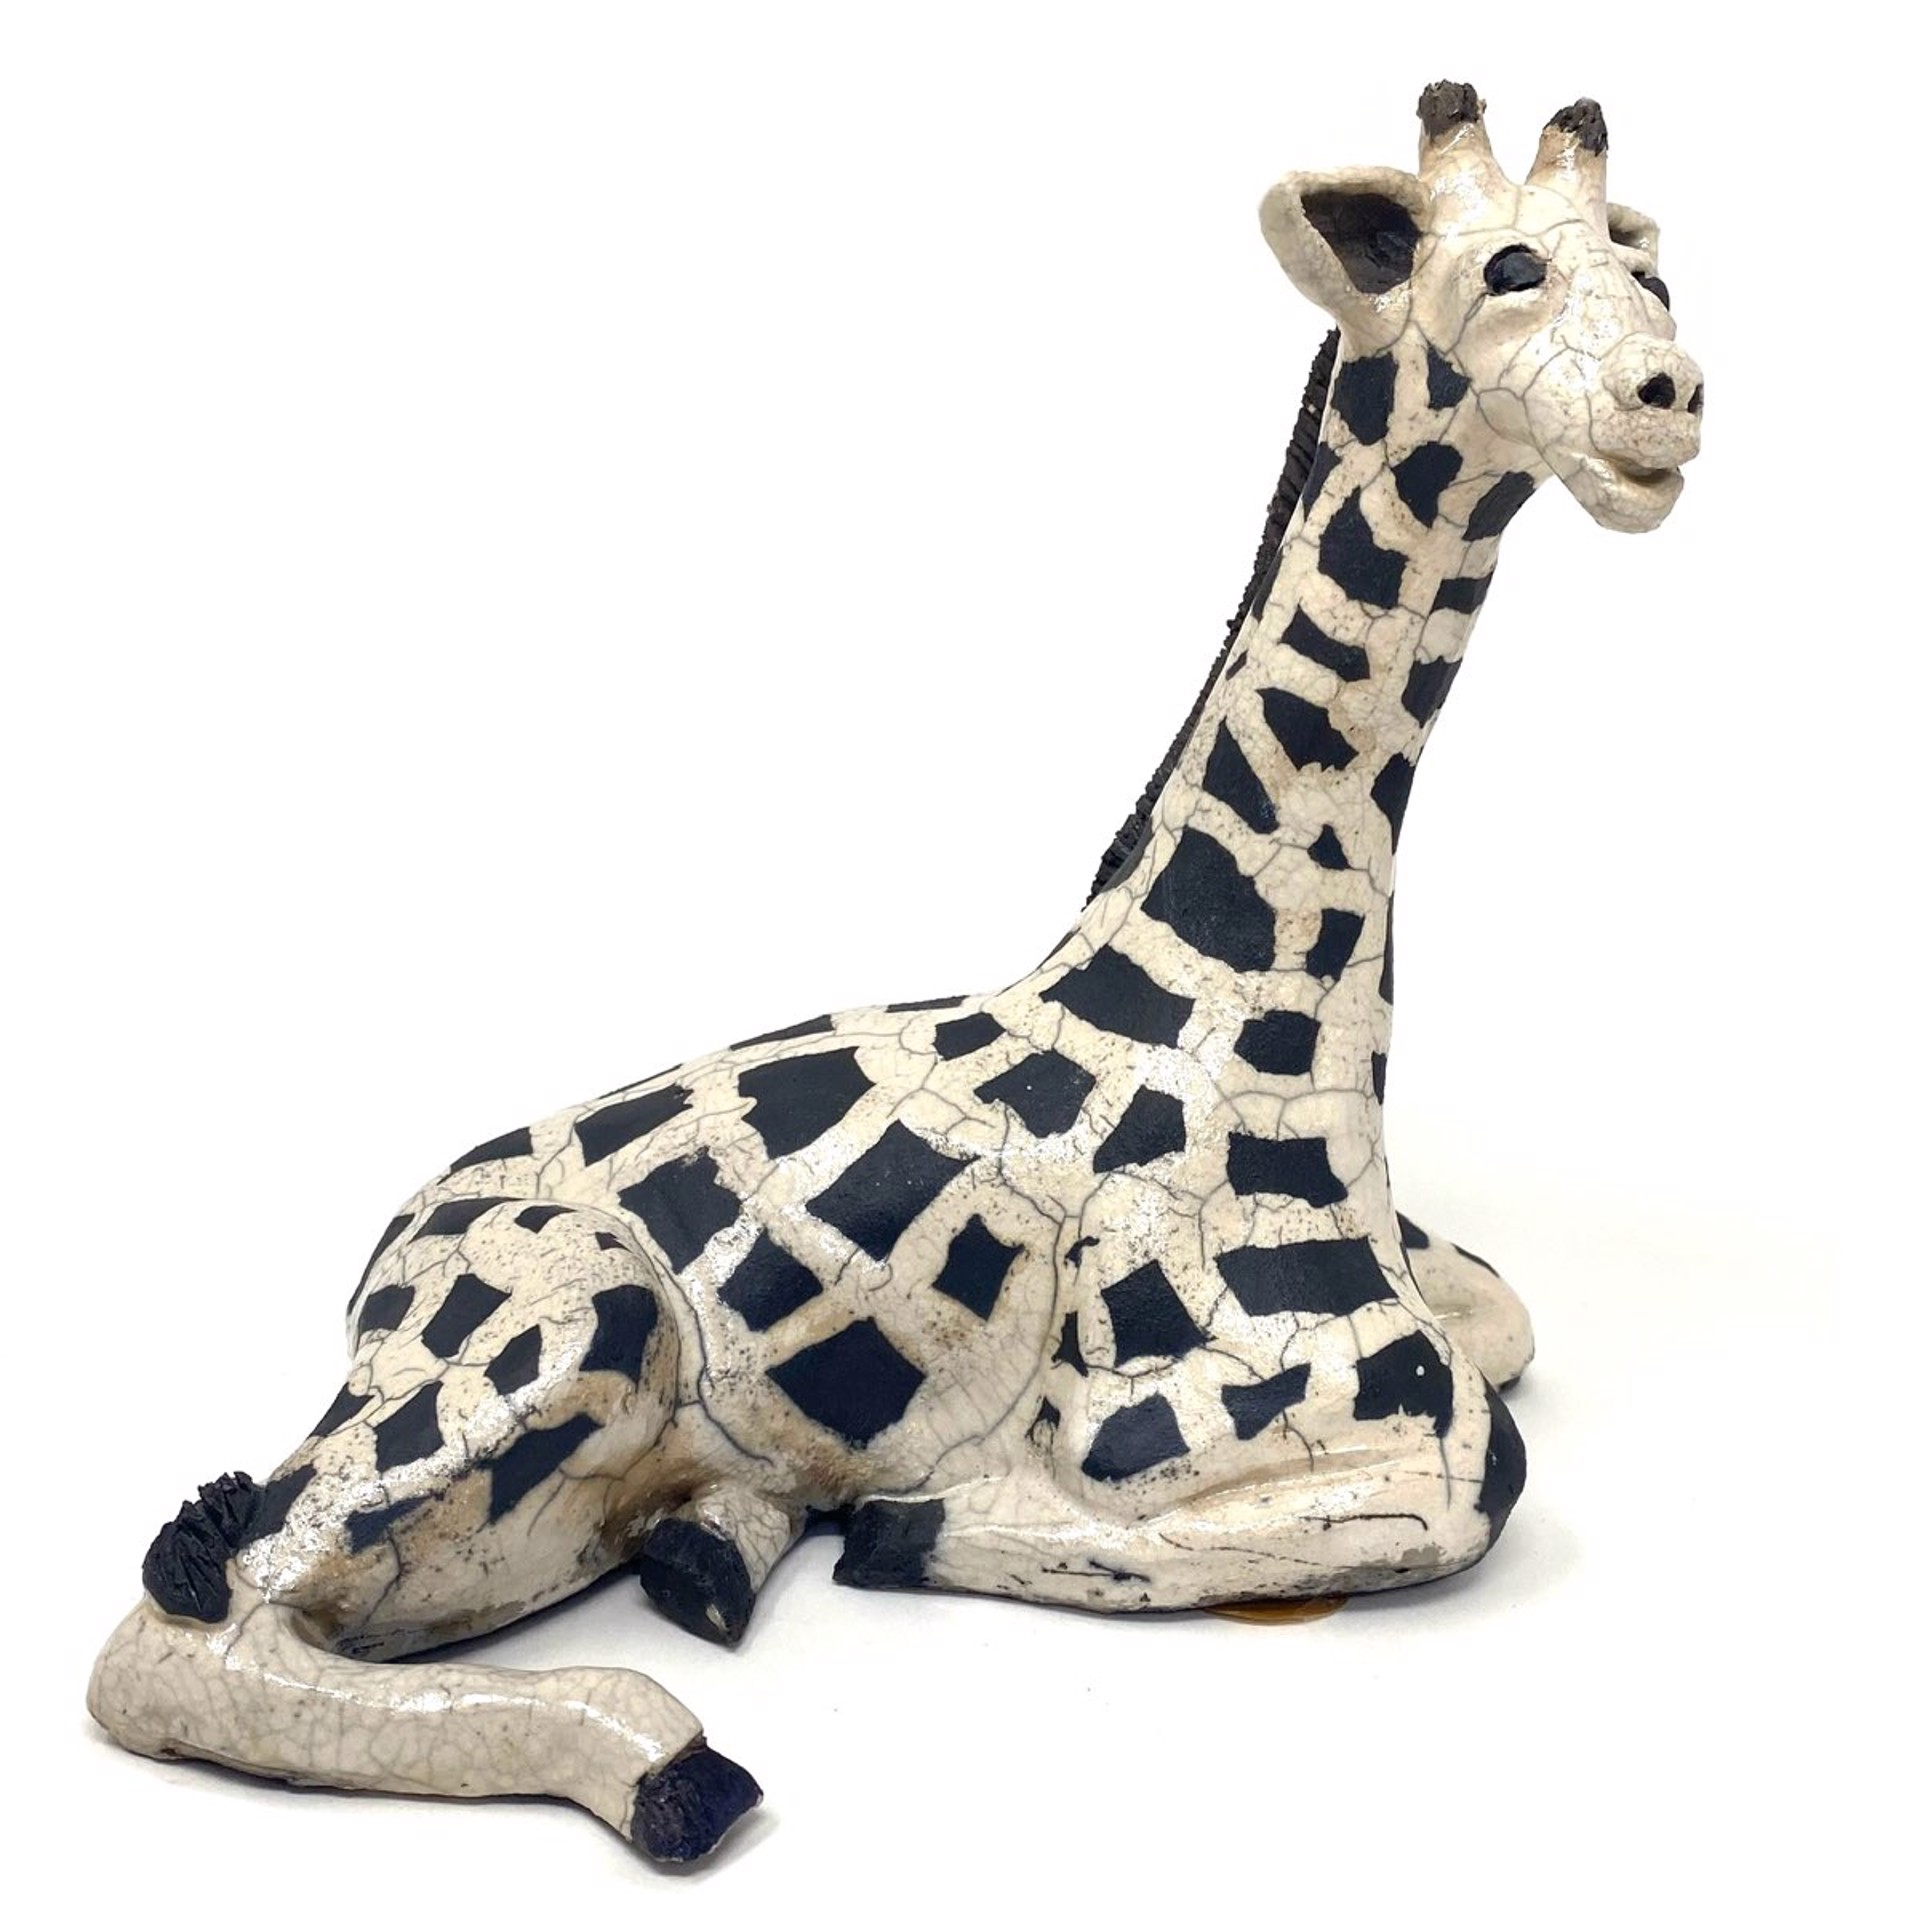 Giraffe by Susan Lawless